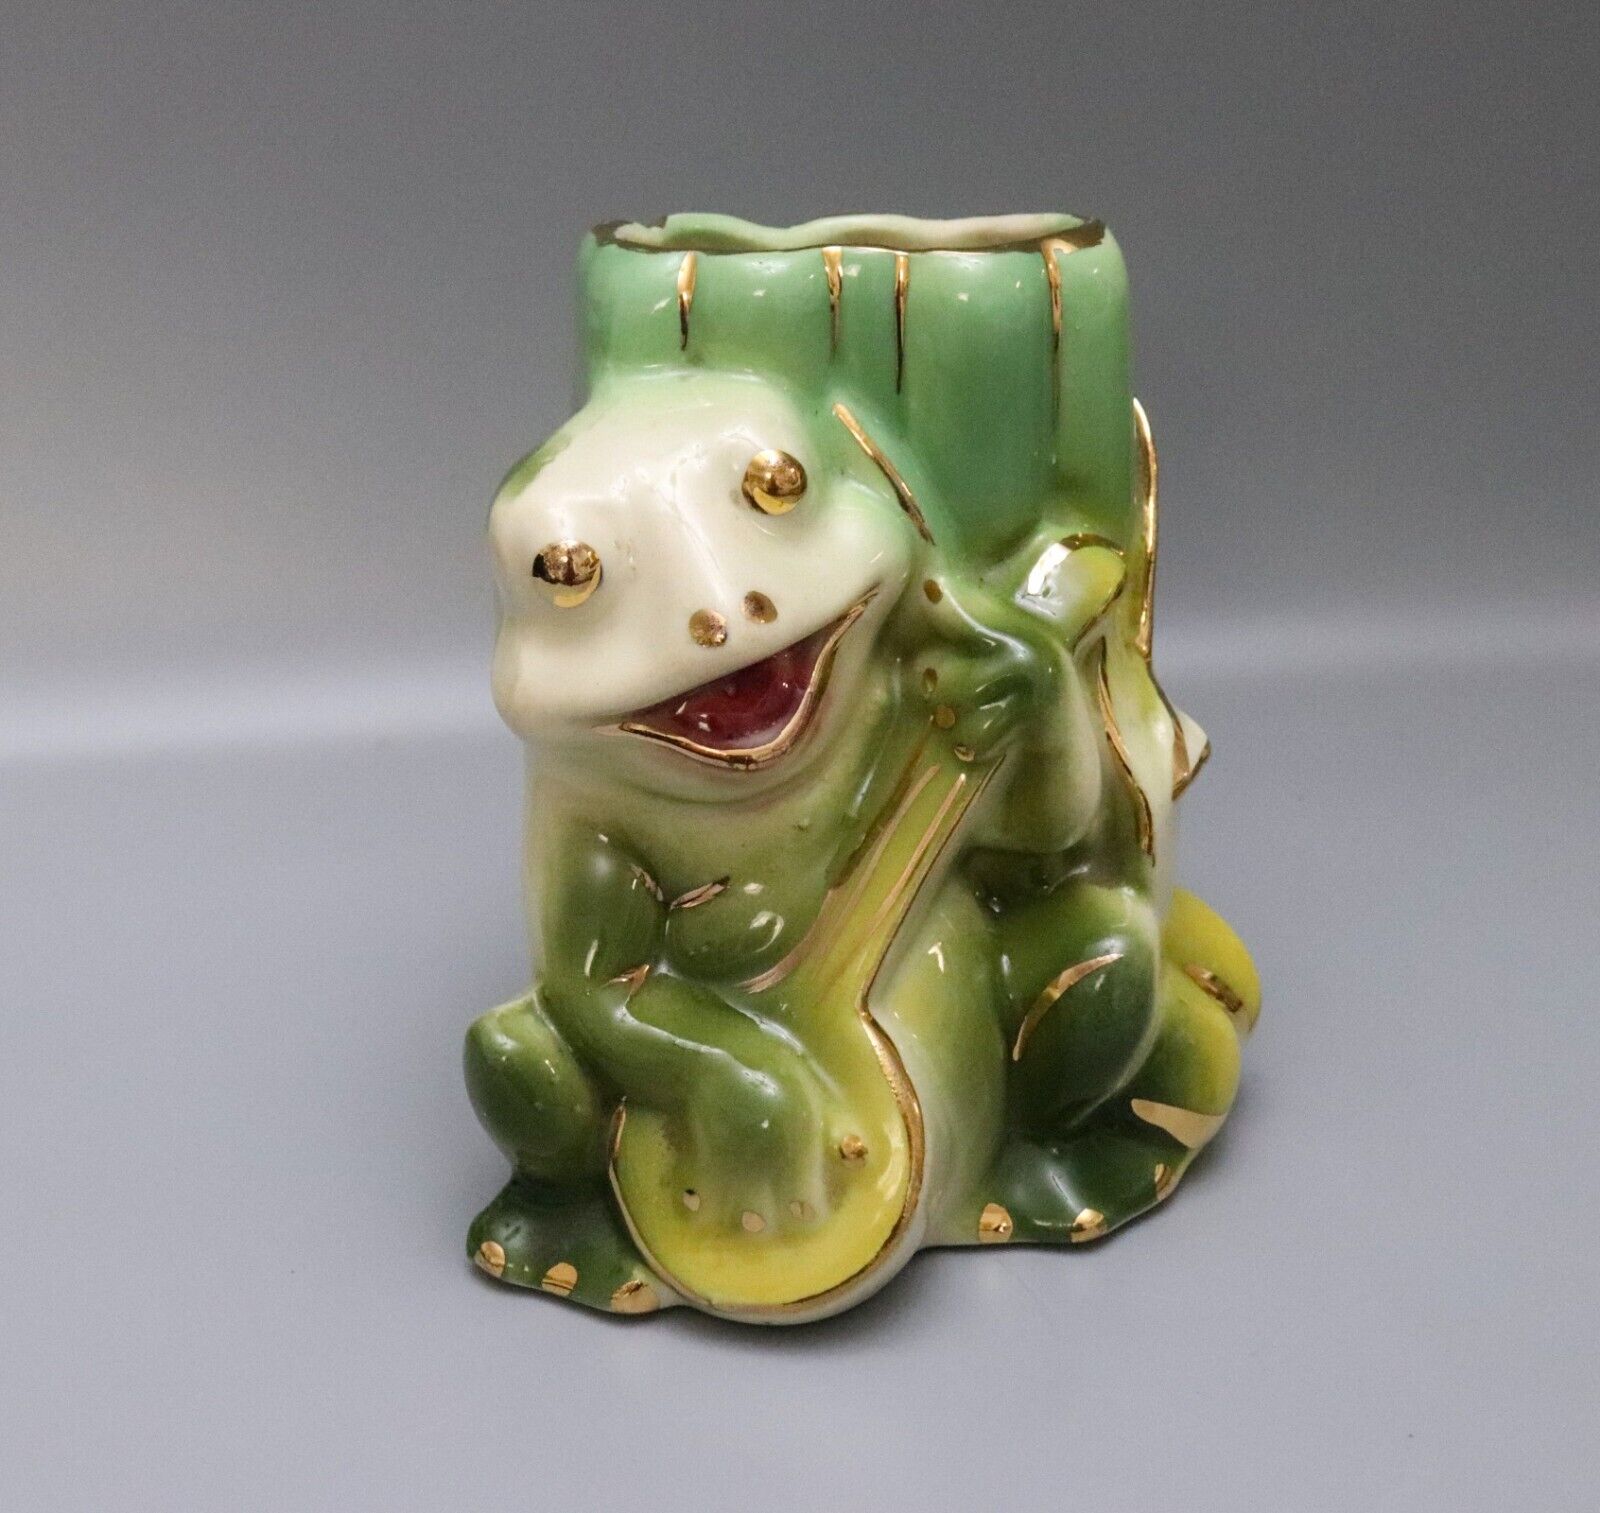  Ceramic Frog Planter Vase Playing Banjo Tulips Gold Accents MCM